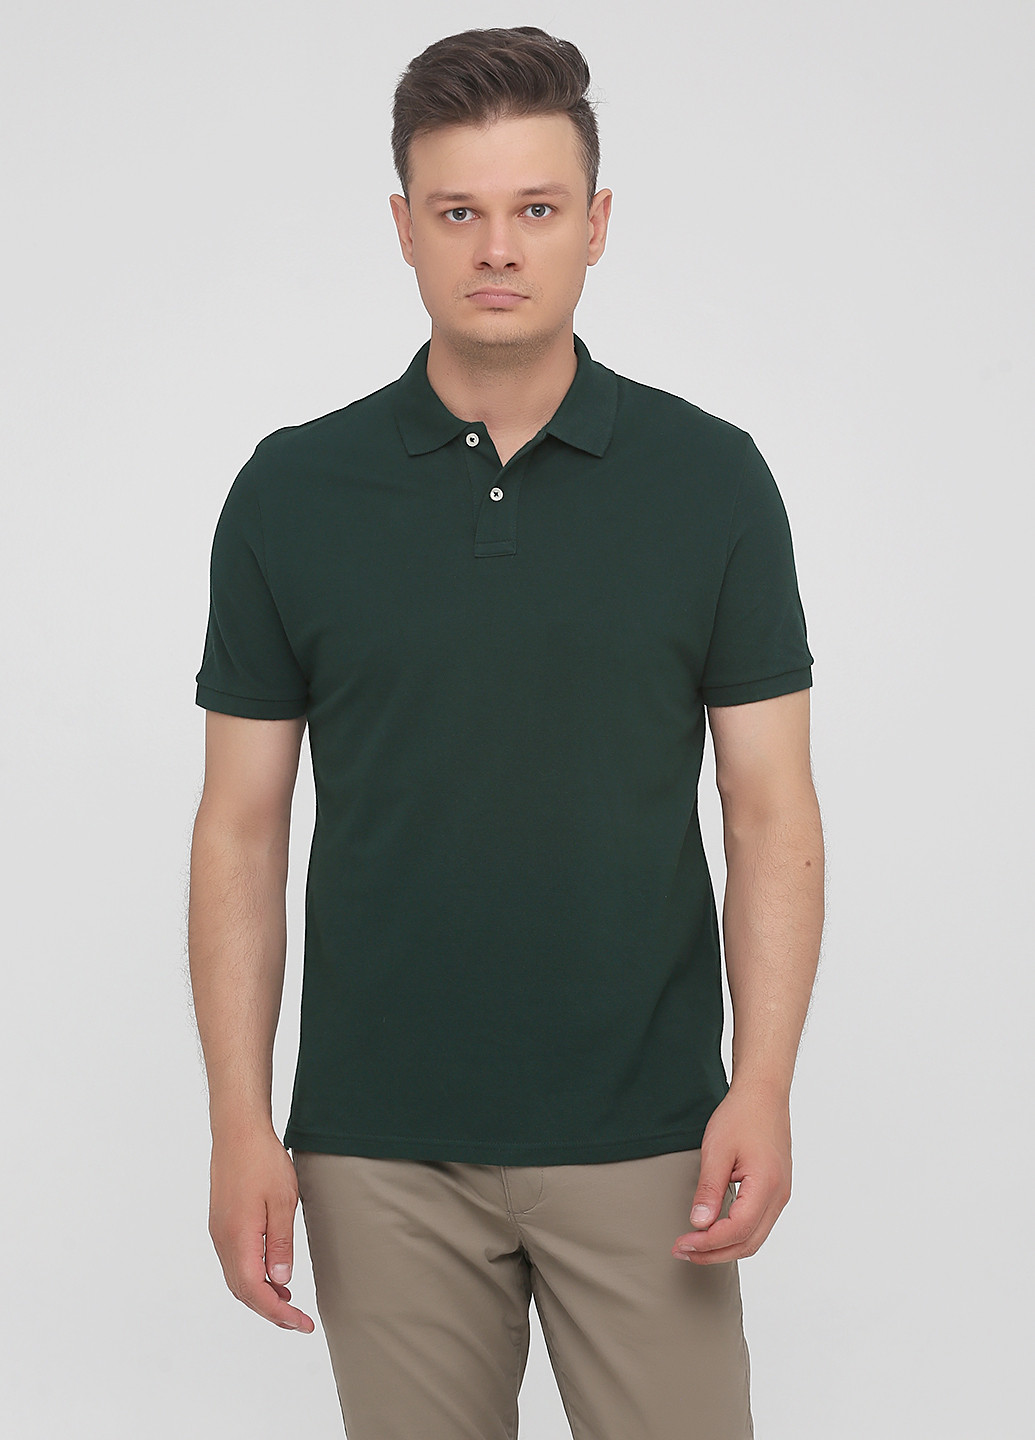 Темно-зеленая футболка-поло для мужчин C&A однотонная